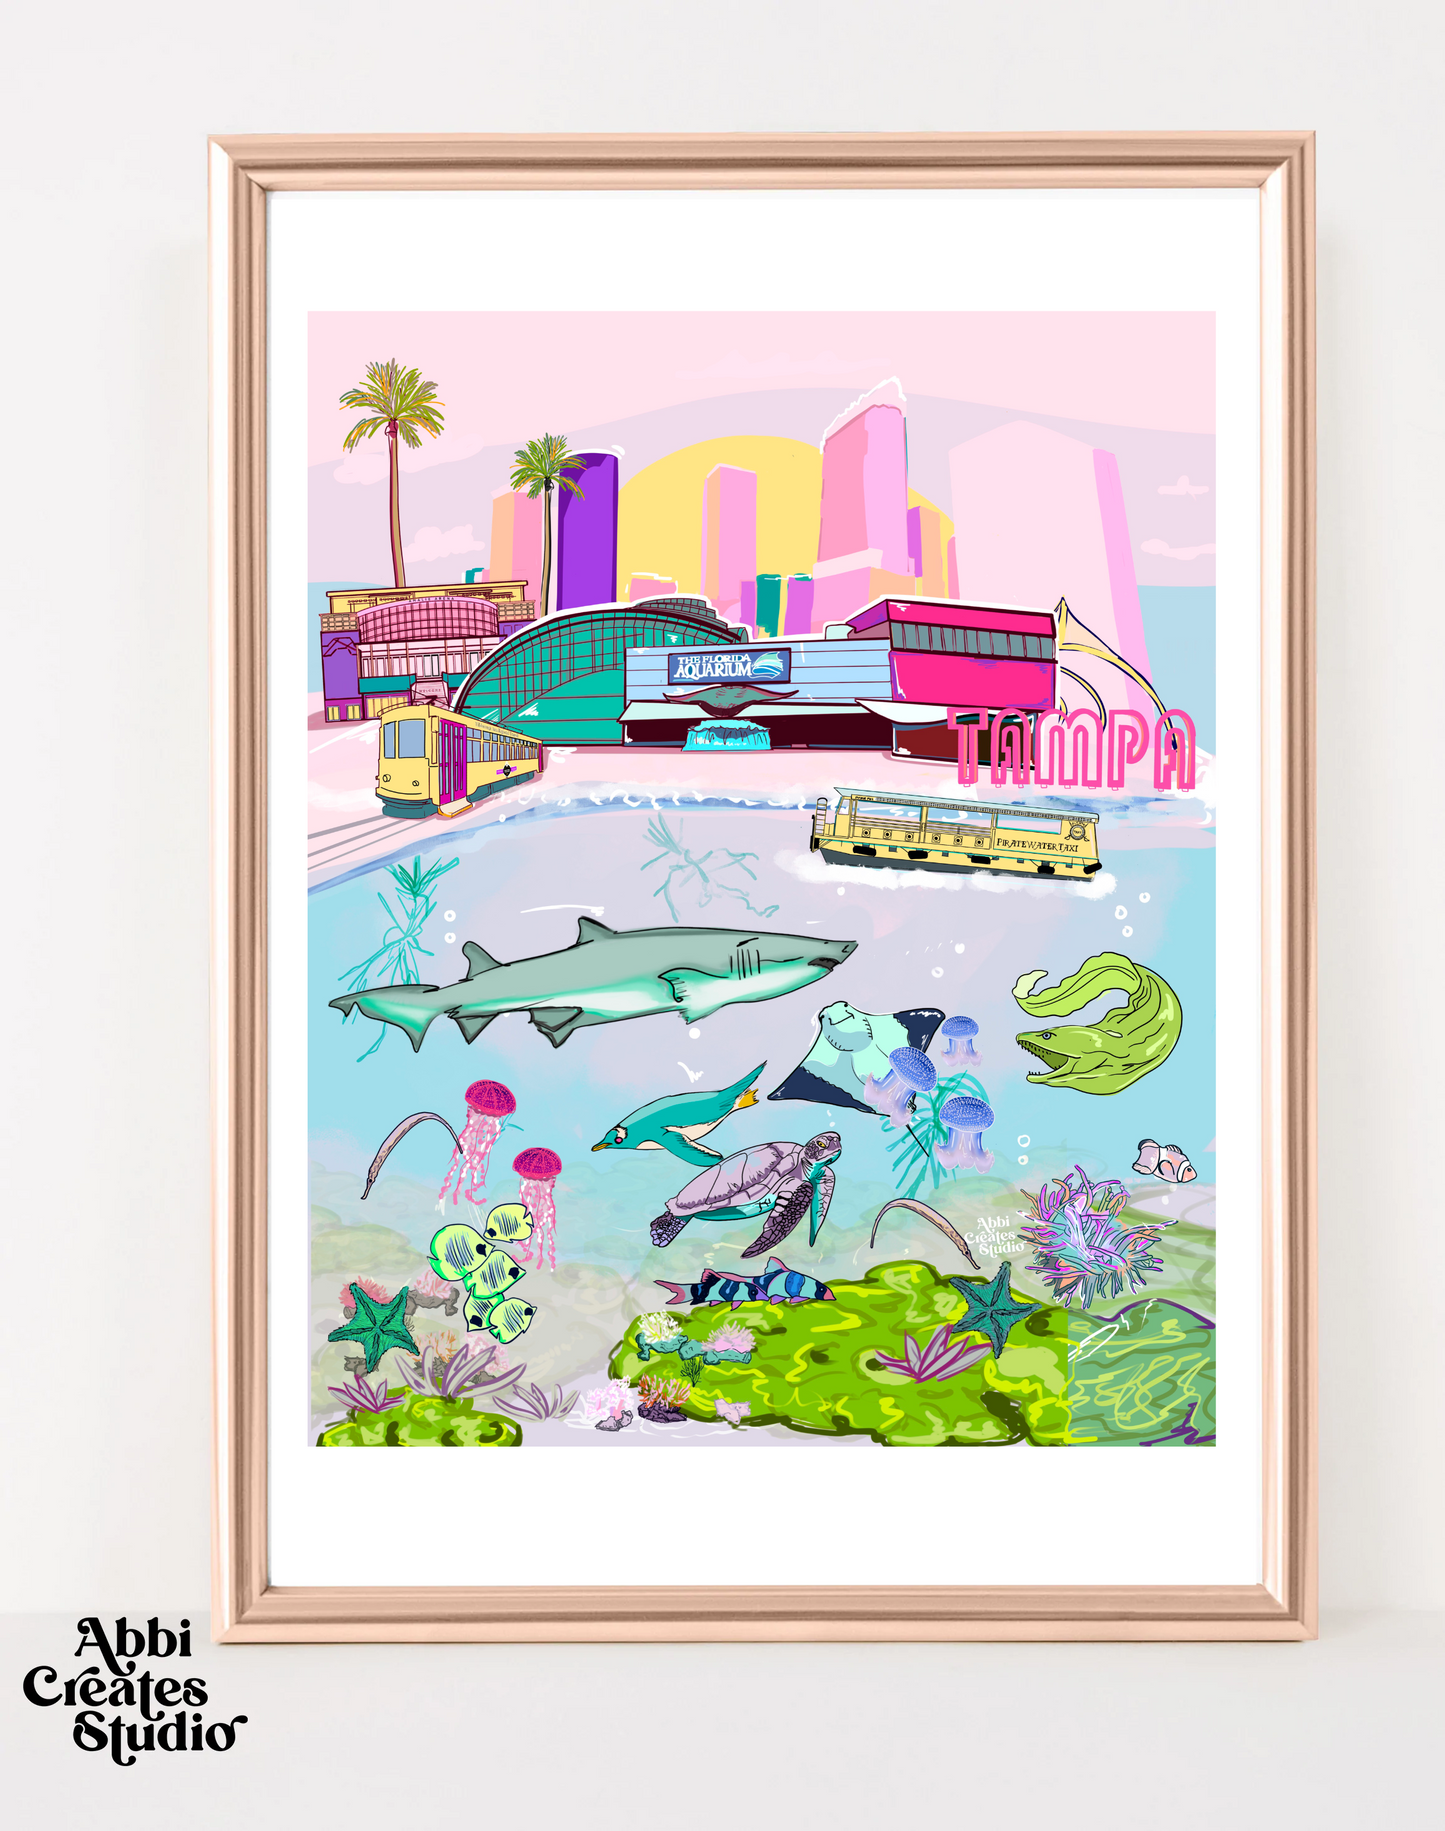 Florida Aquarium Tampa Bay art print - Abbicreates Studio